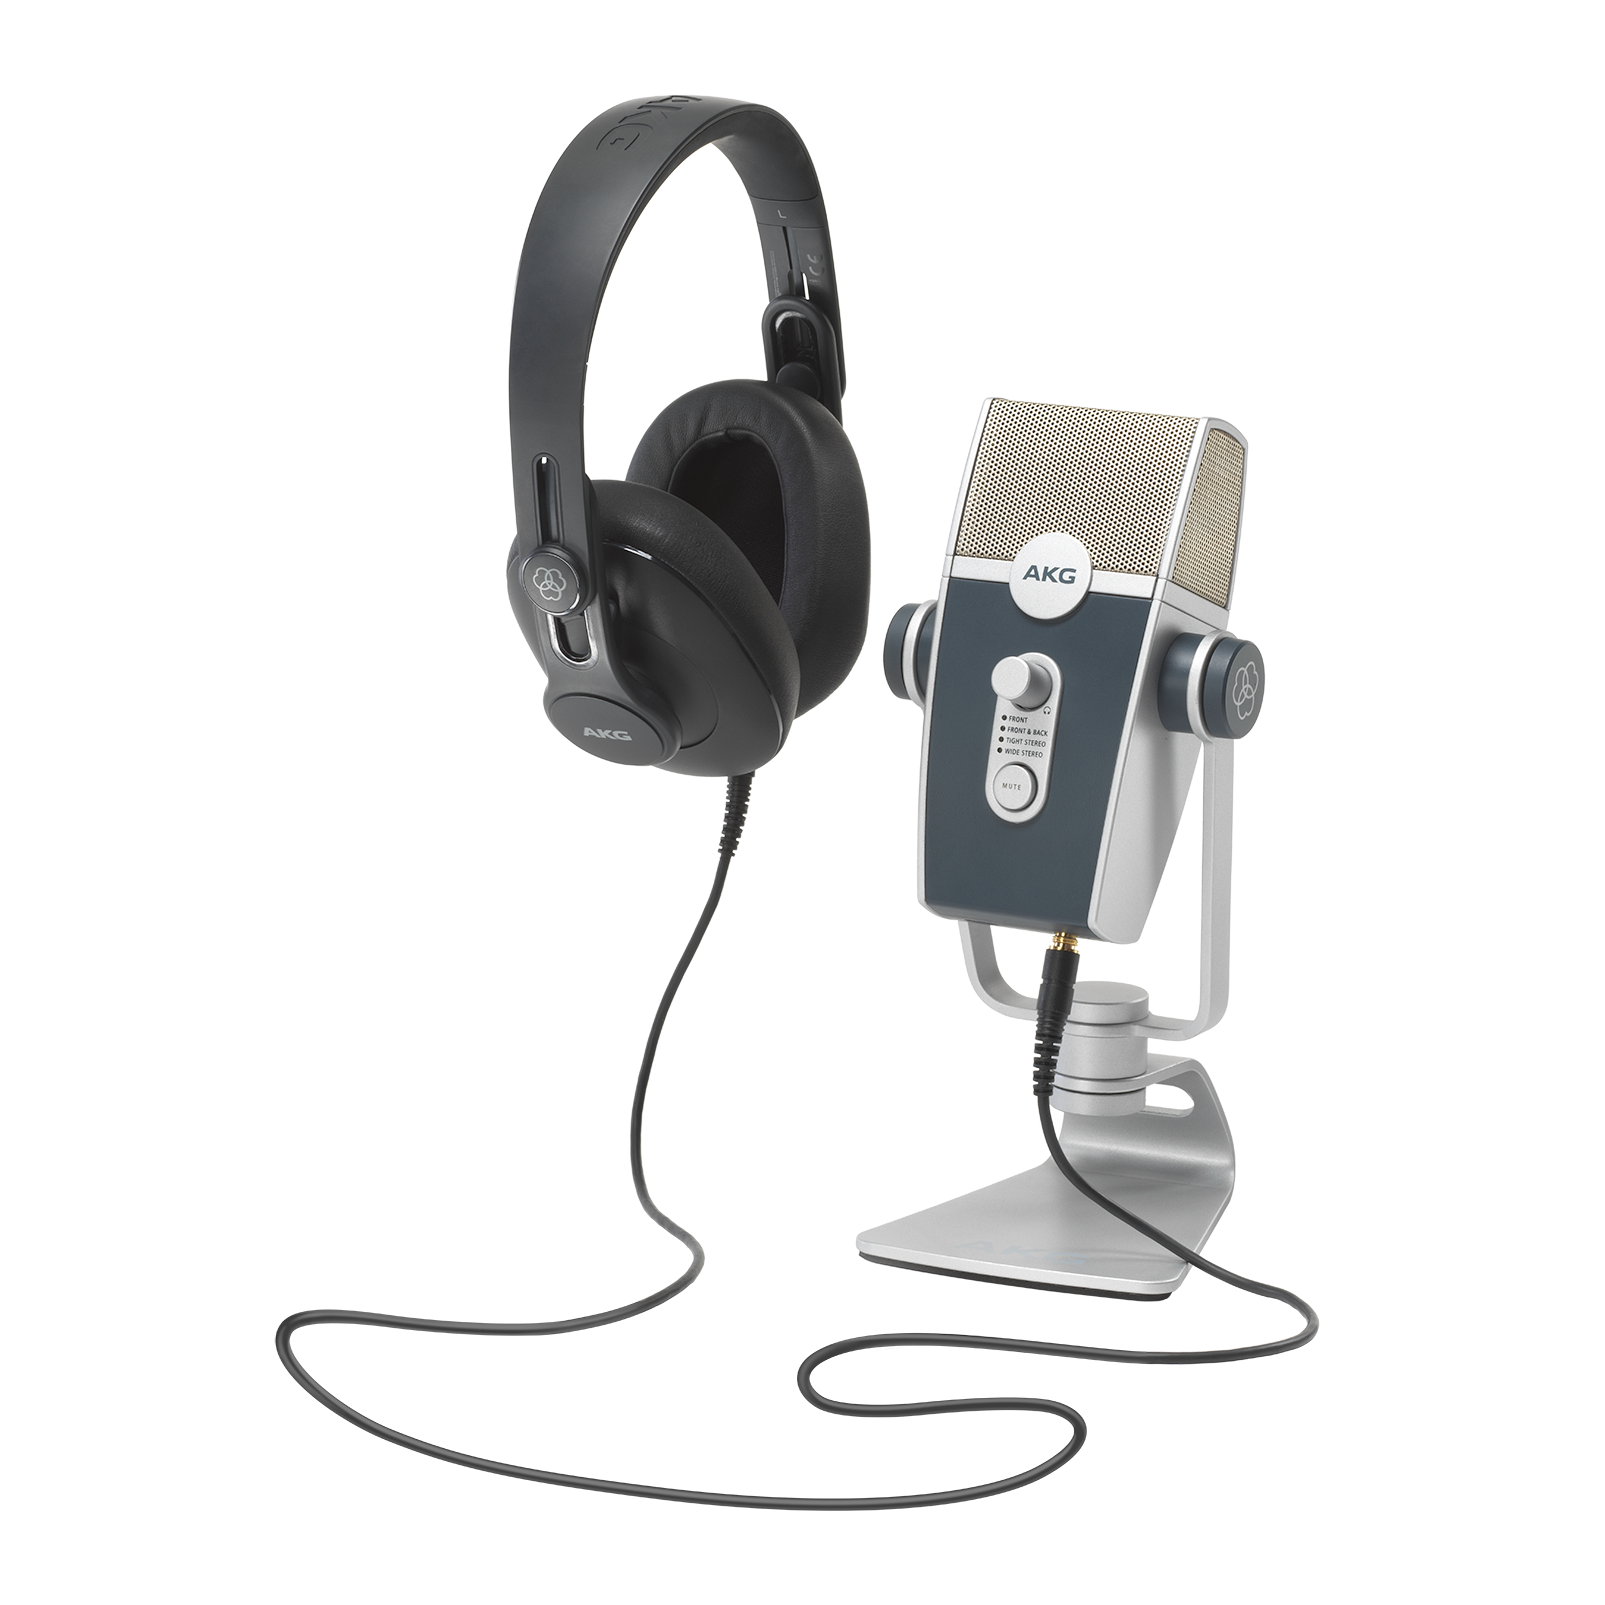 AKG Podcaster Essentials (B-Stock) - Black / Gray - Audio Production Toolkit: AKG Lyra USB Microphone and AKG K371 Headphones - Hero